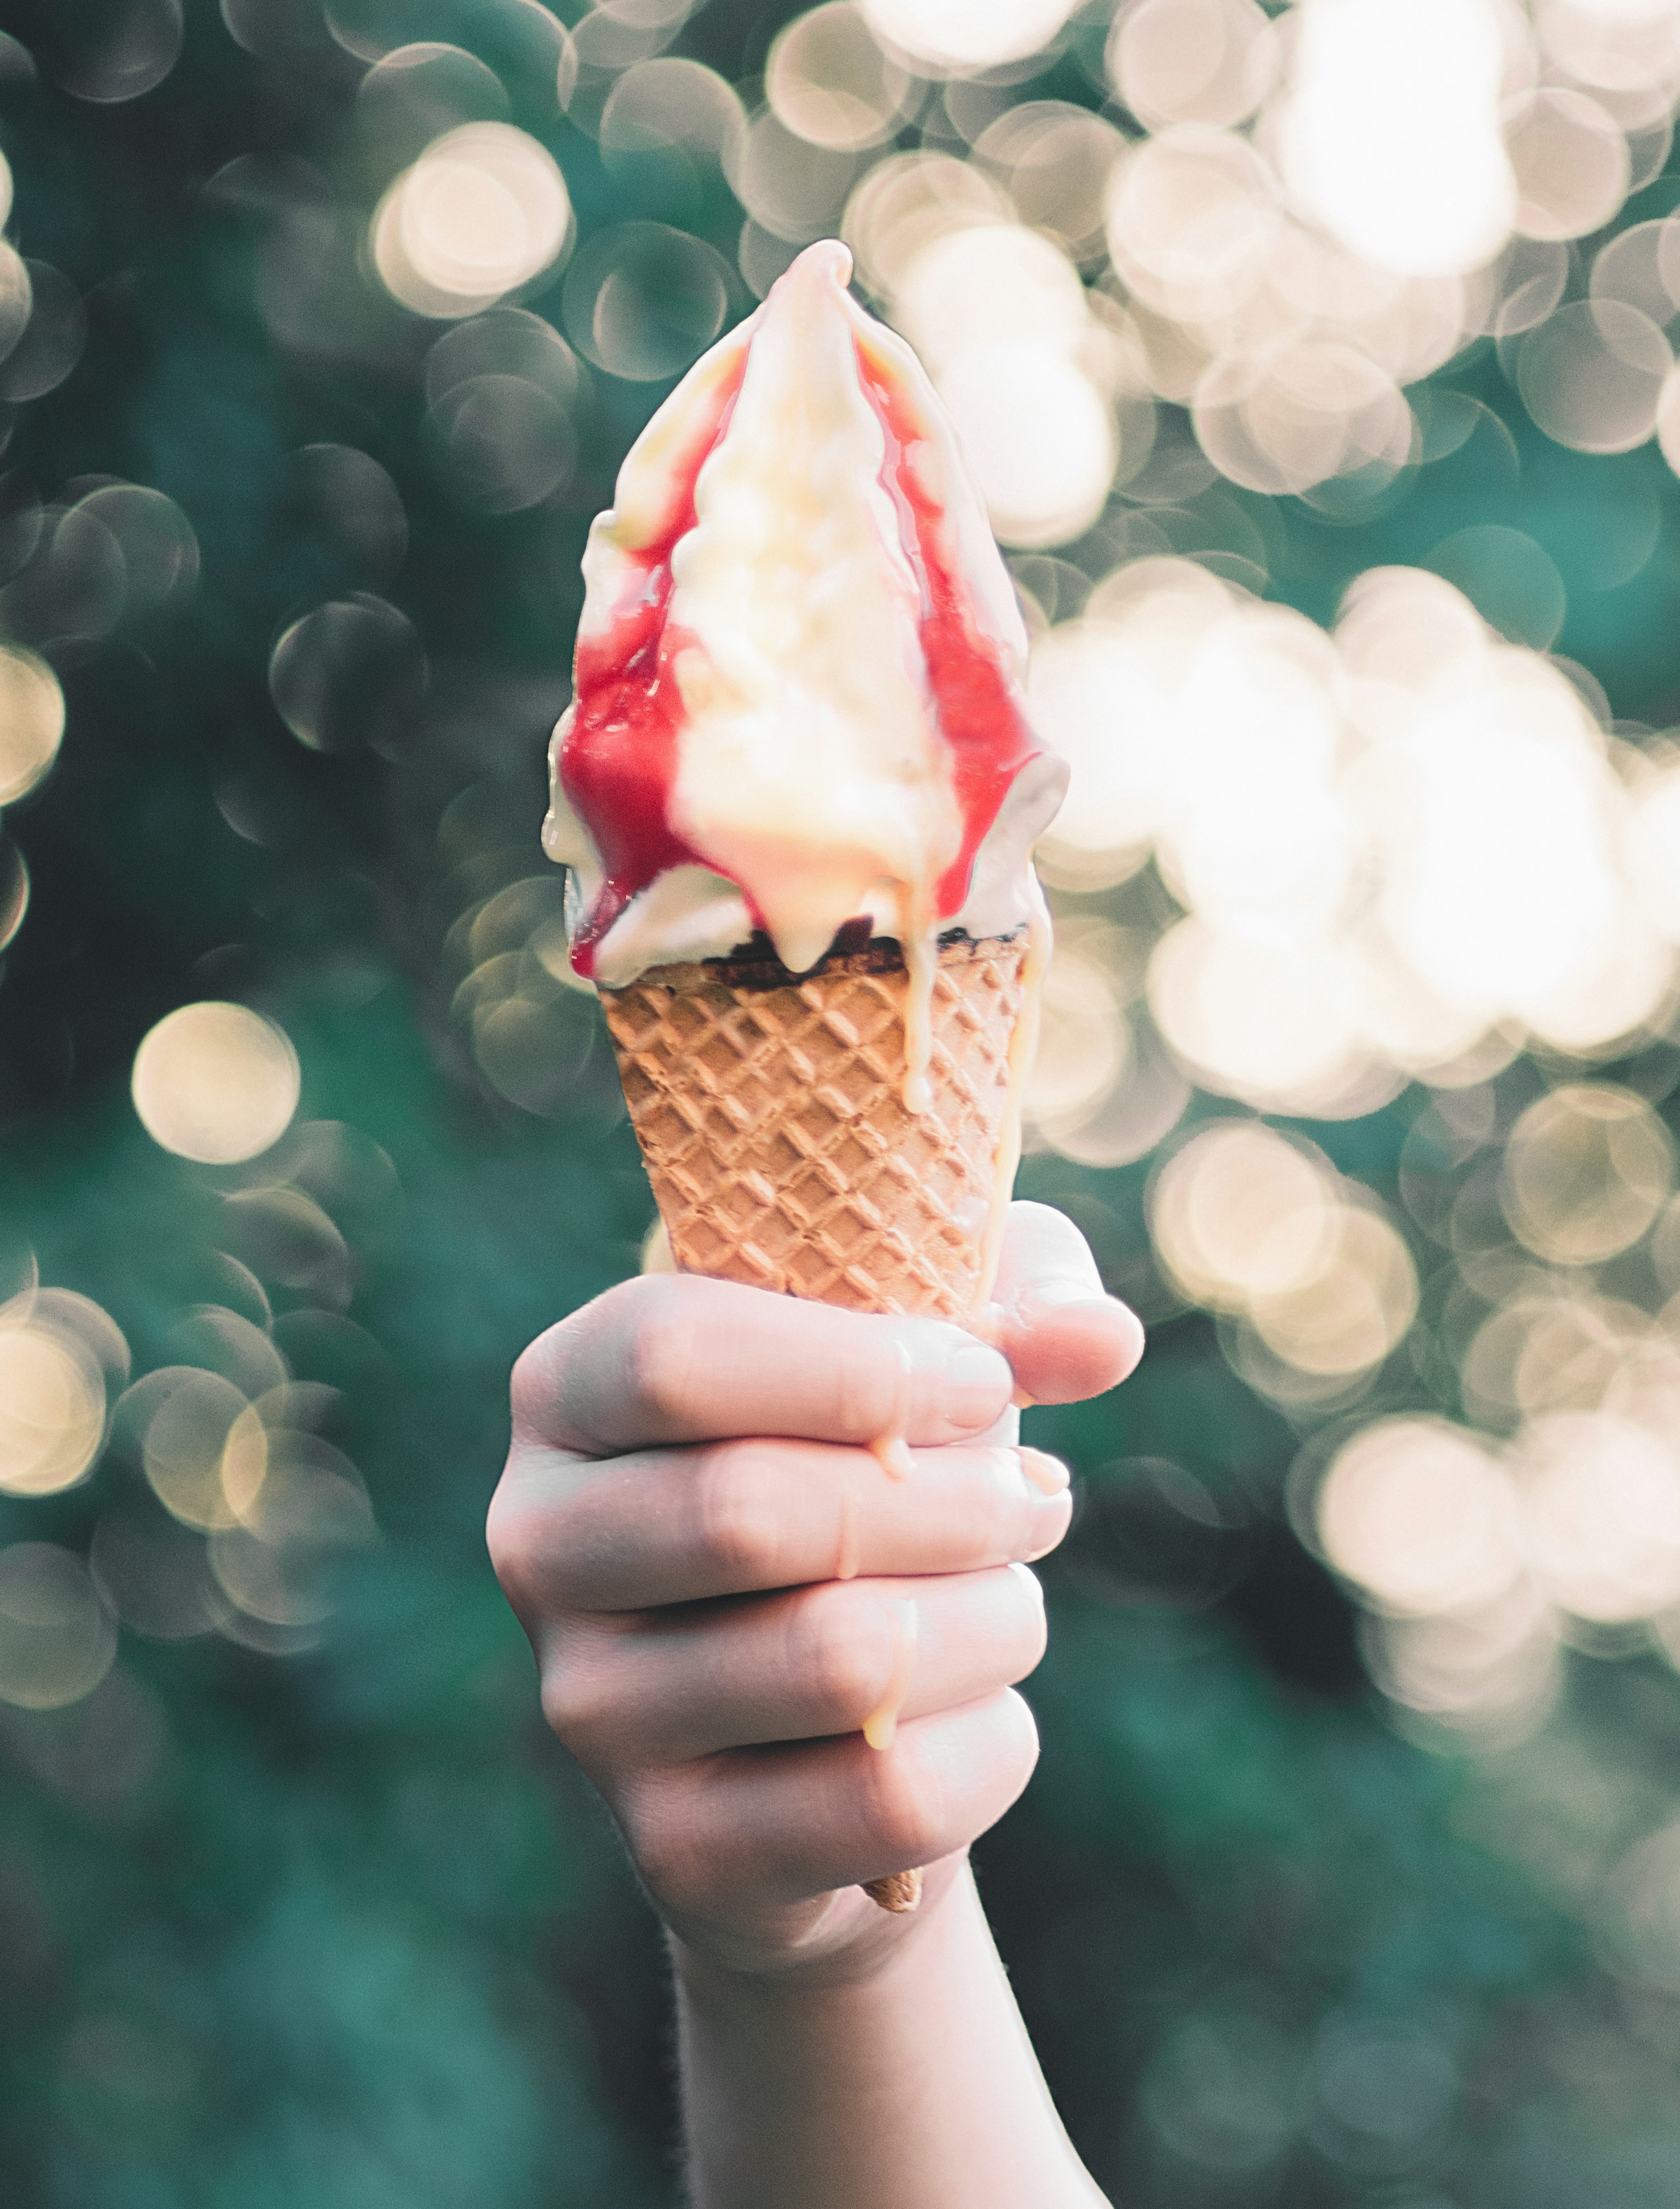 A dripping ice cream cone | Source: Unsplash